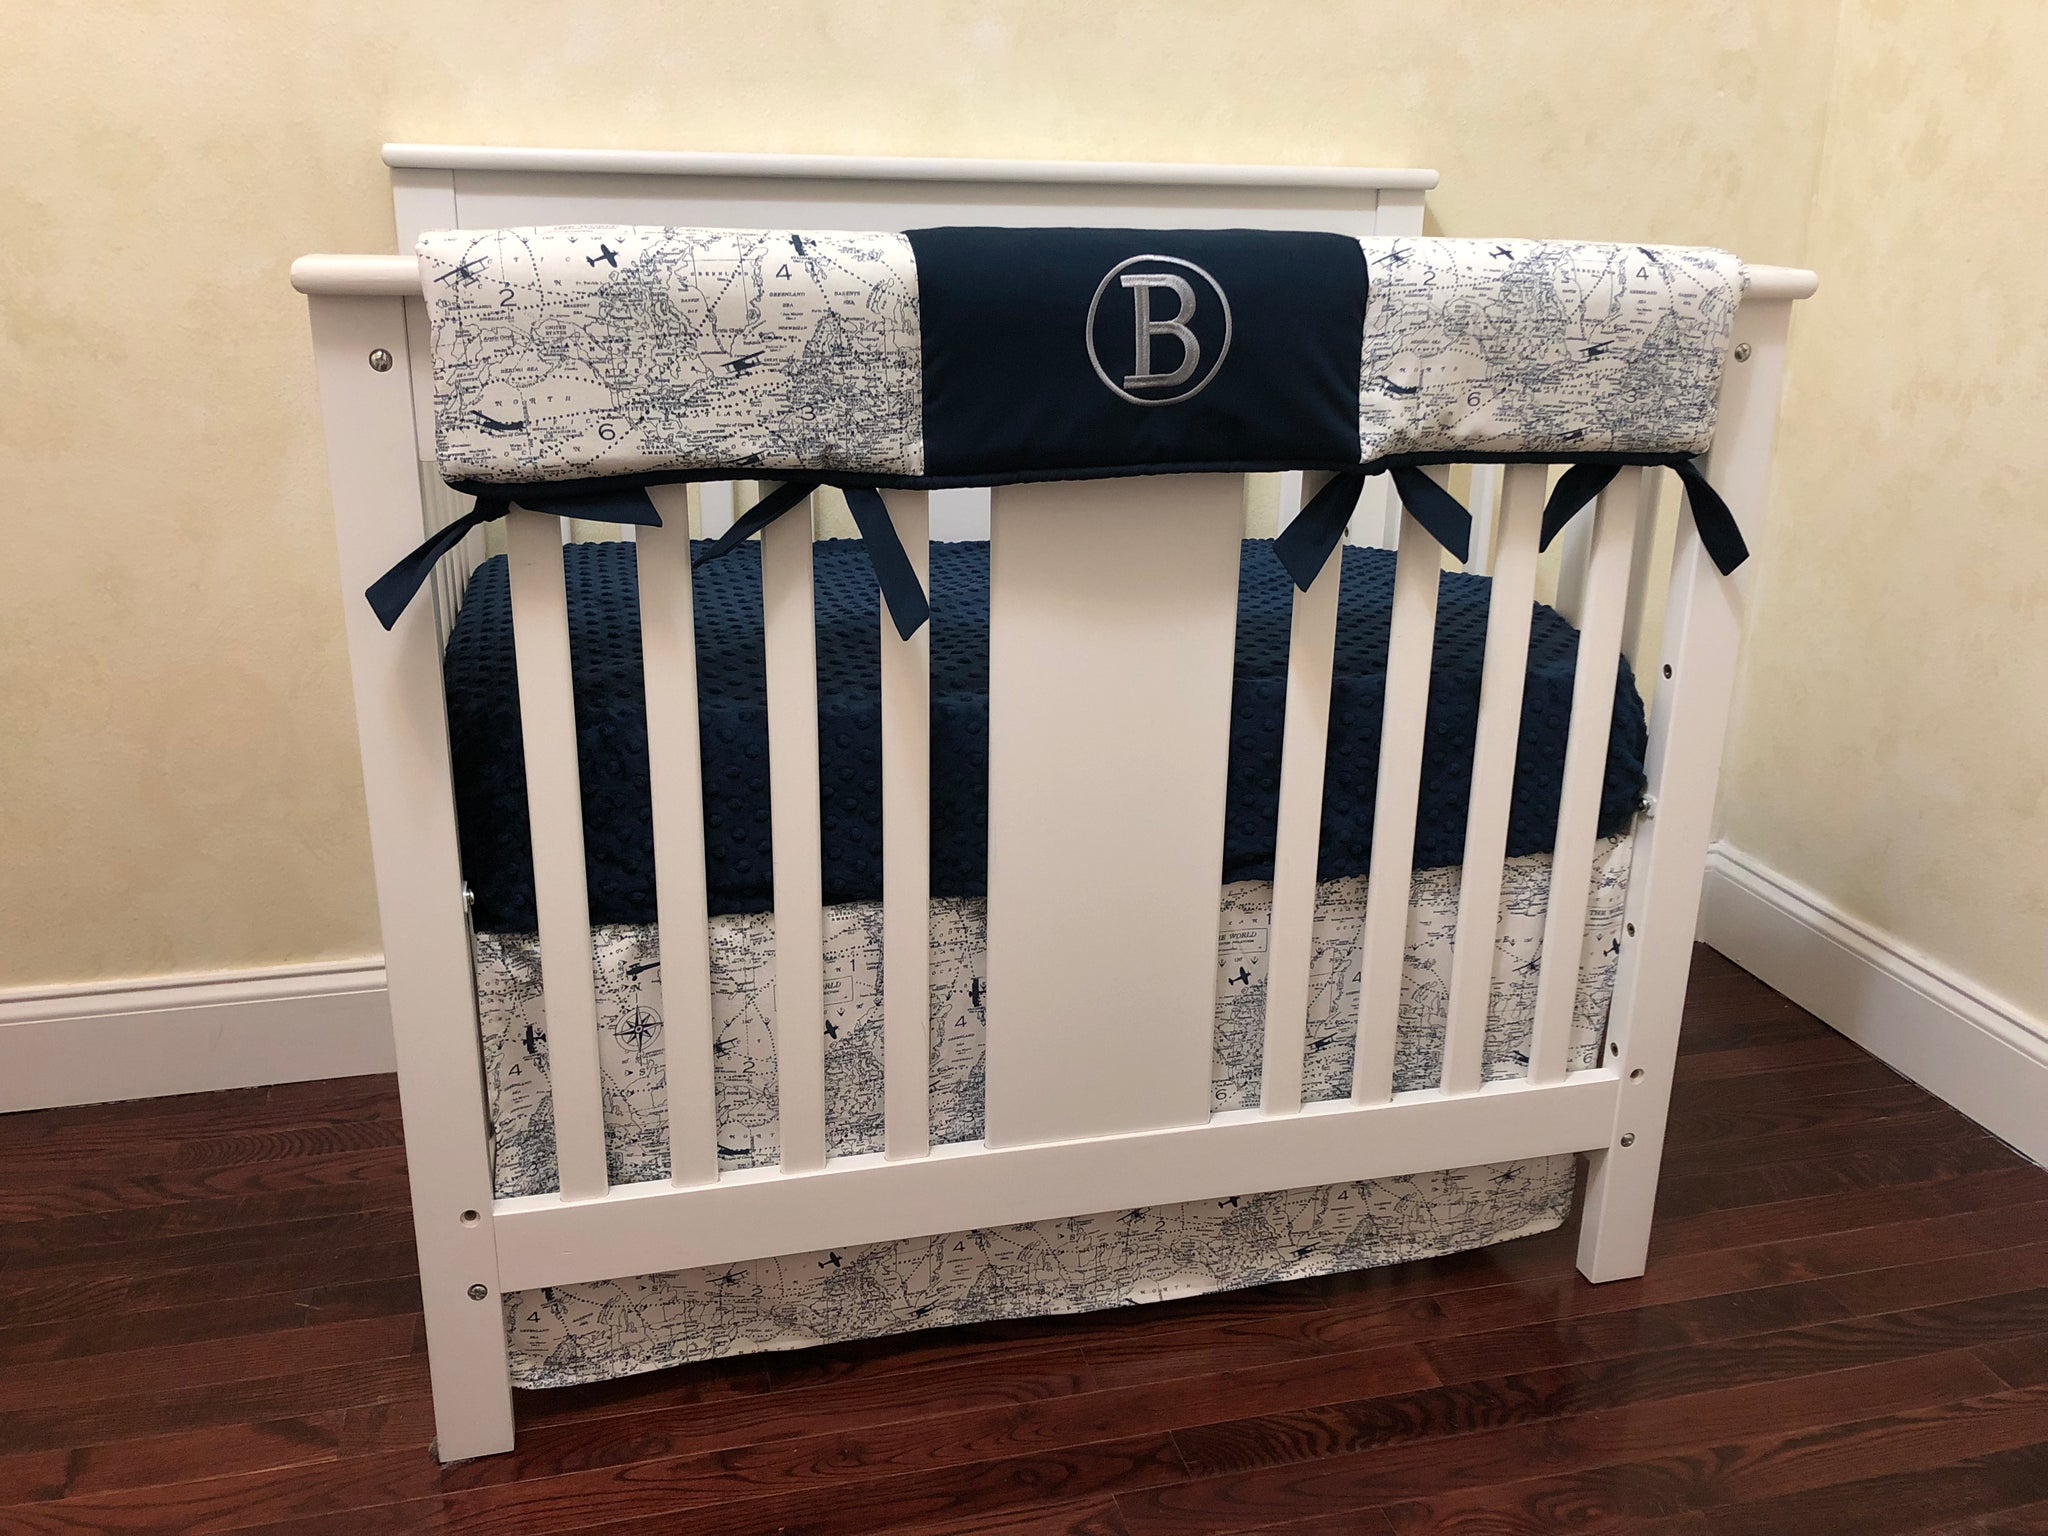 navy blue crib comforter